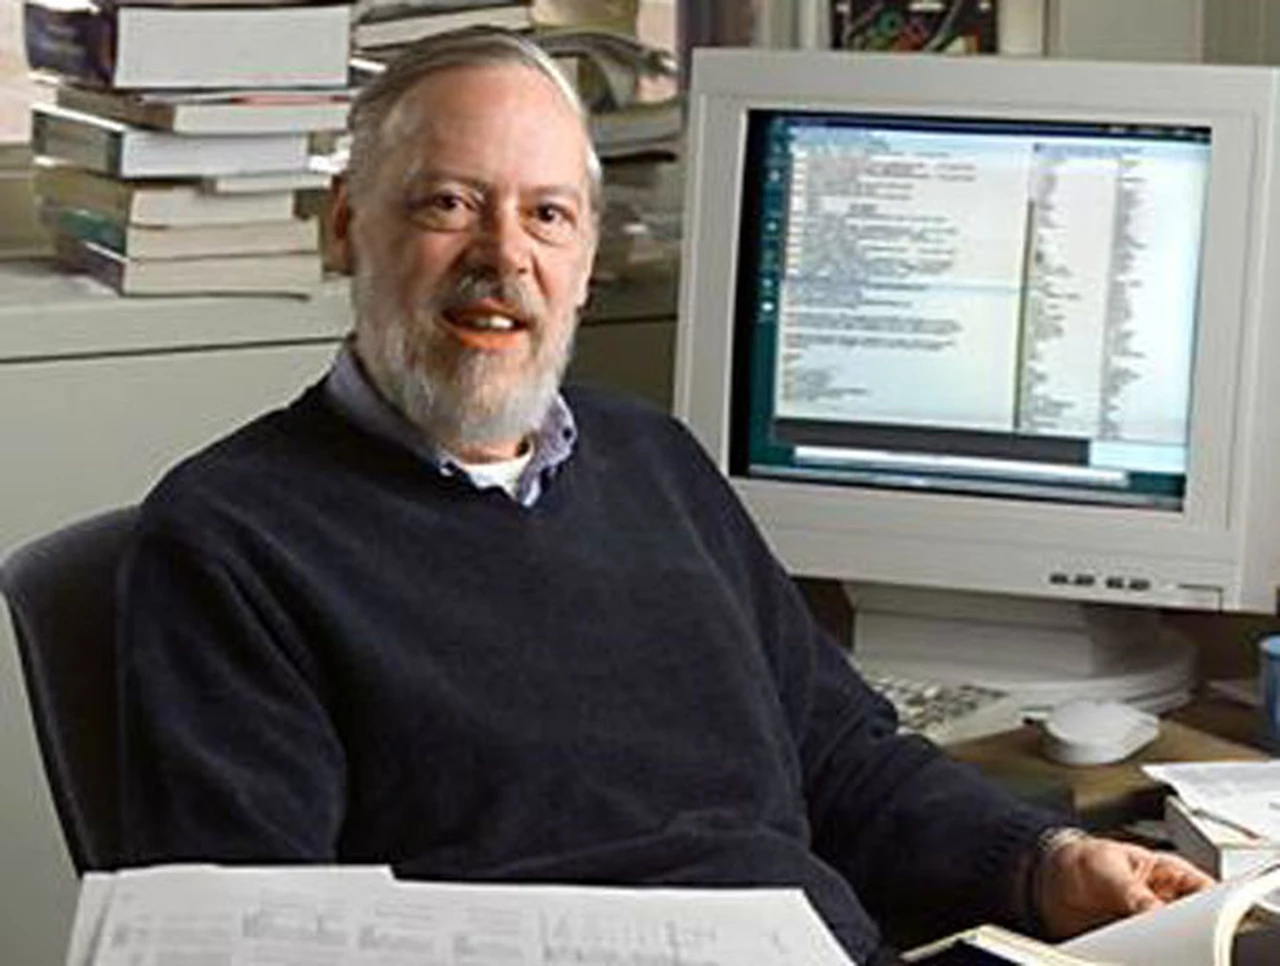 Falleció el creador del lenguaje C y el sistema operativo Unix